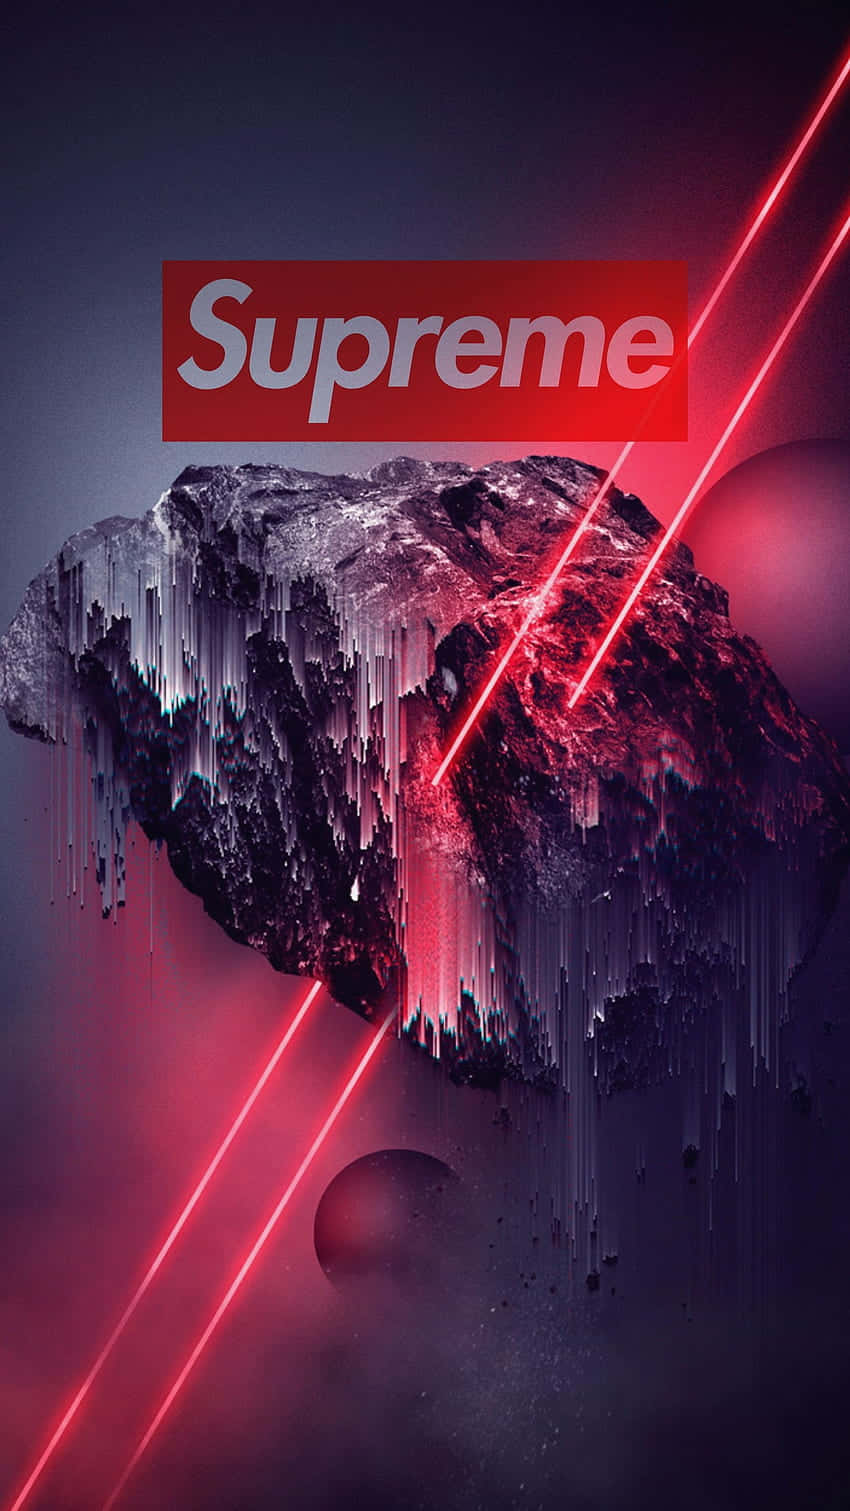 Supreme Iceberg Laser Abstract Art Wallpaper